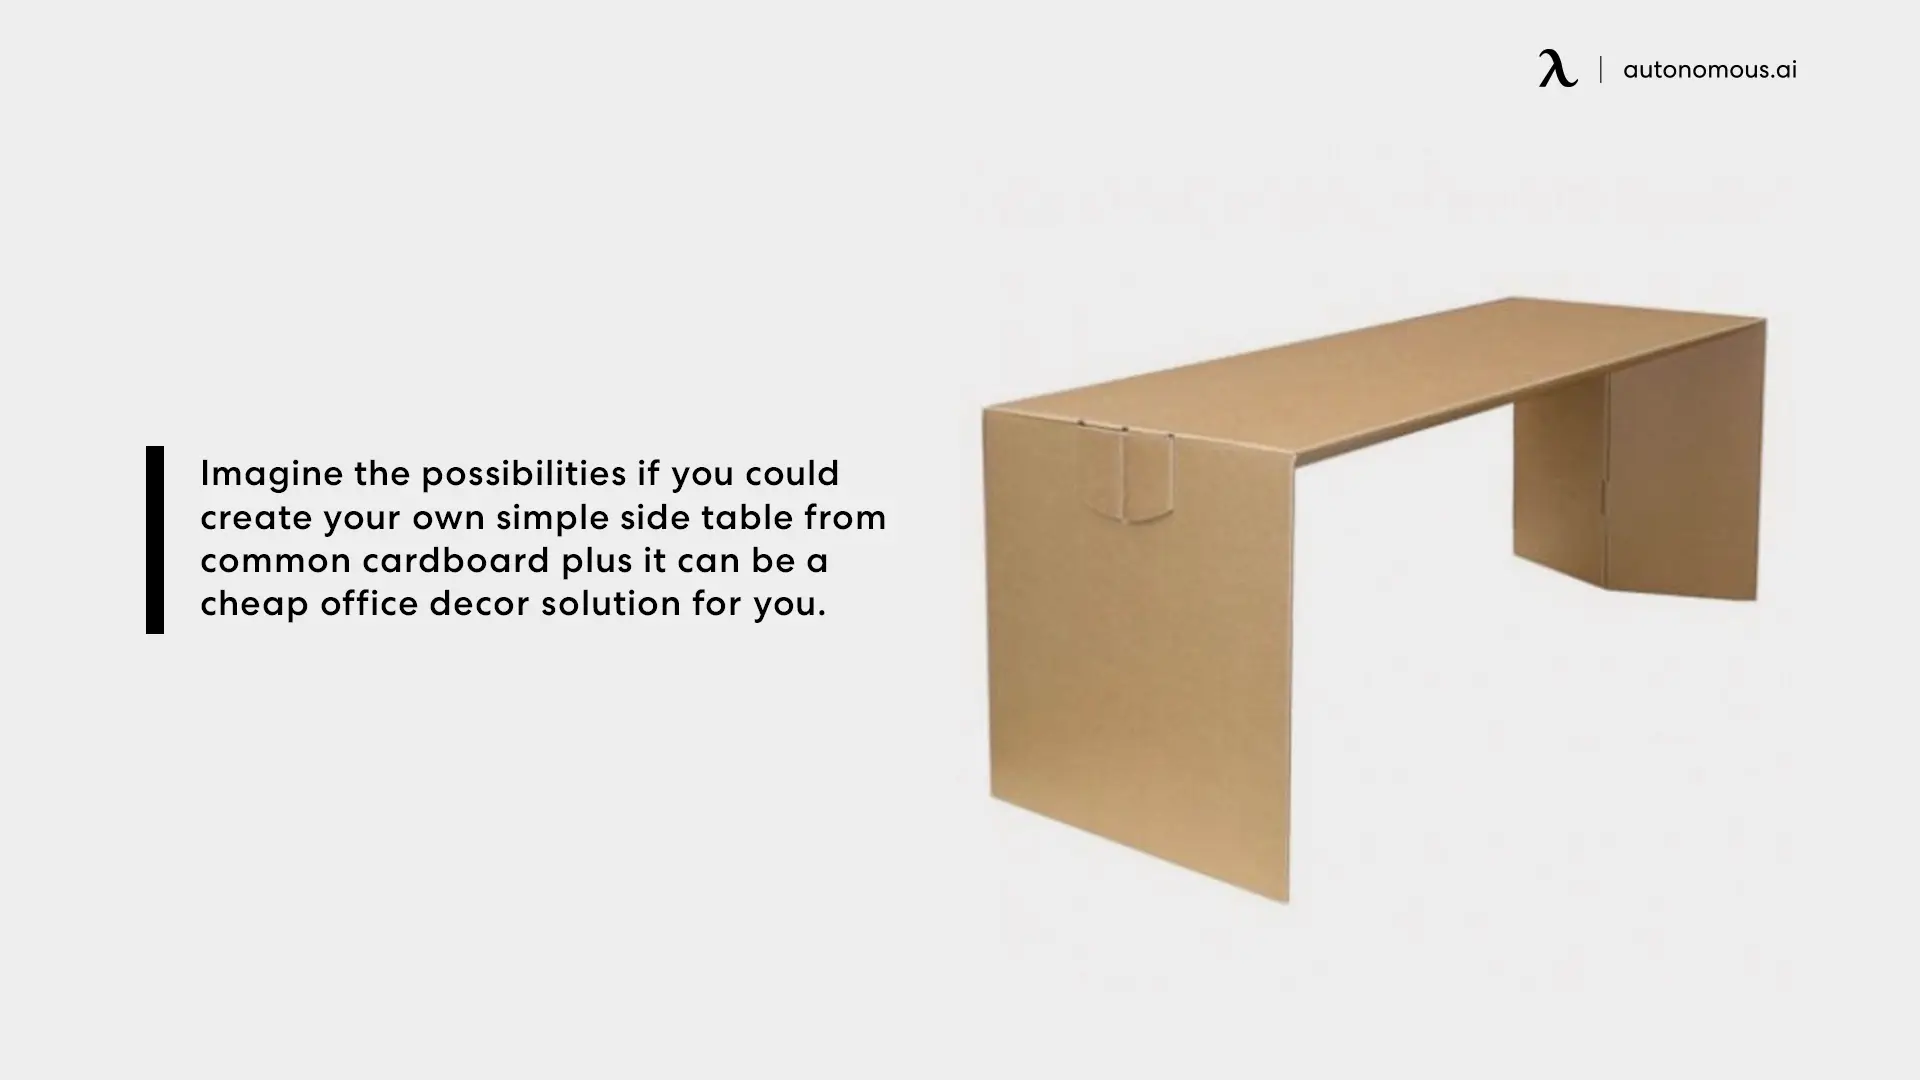 Why Go For a DIY Cardboard Table?